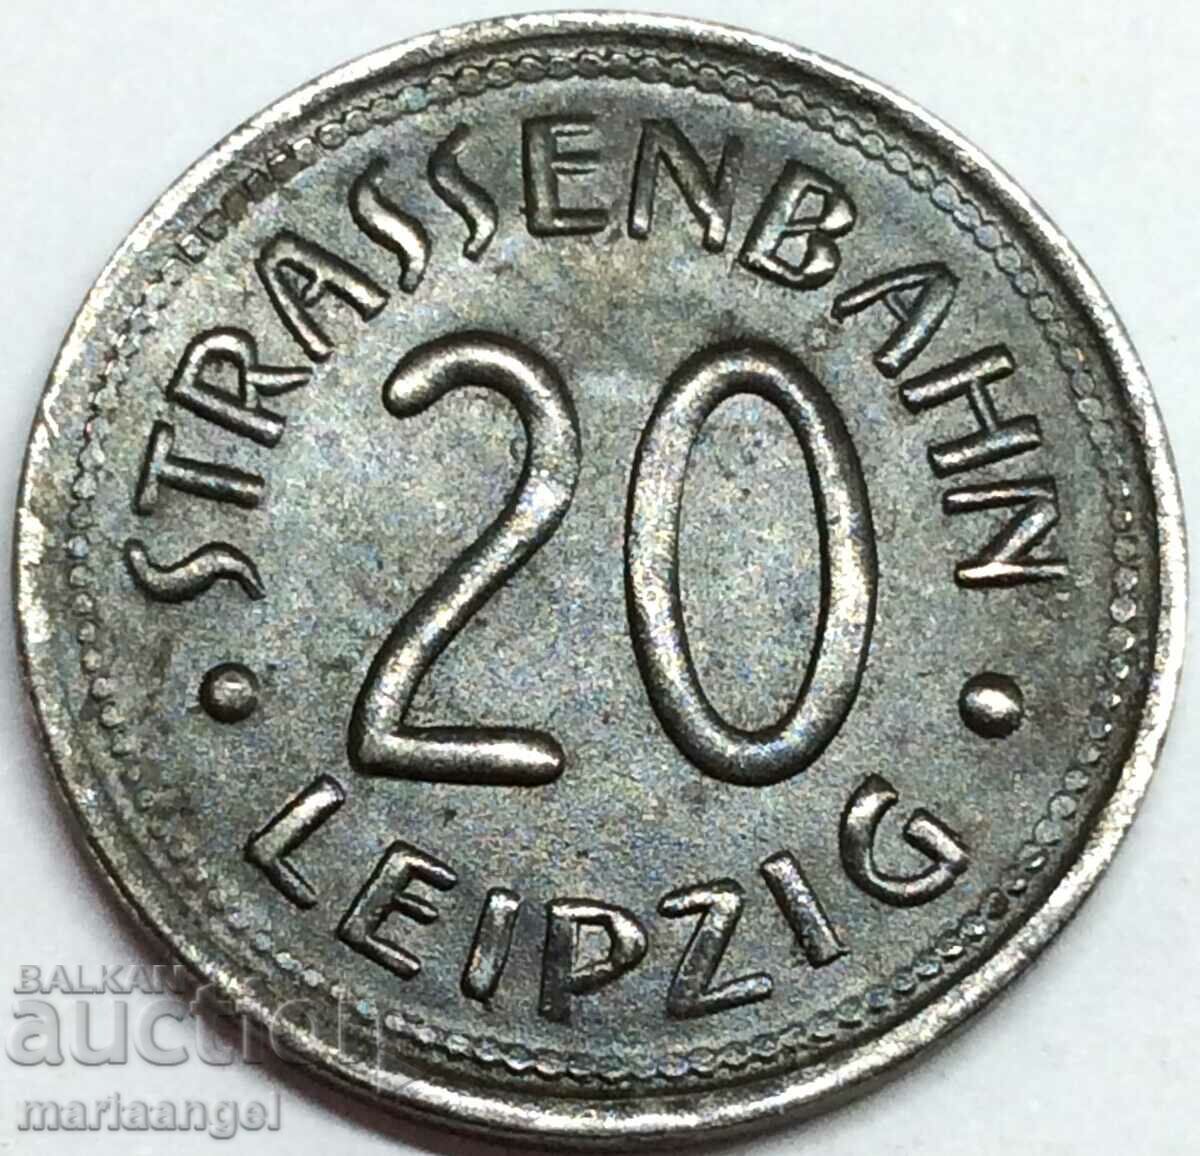 20 Pfennig Germania Leipzig Al Doilea Război Mondial 1918-1919